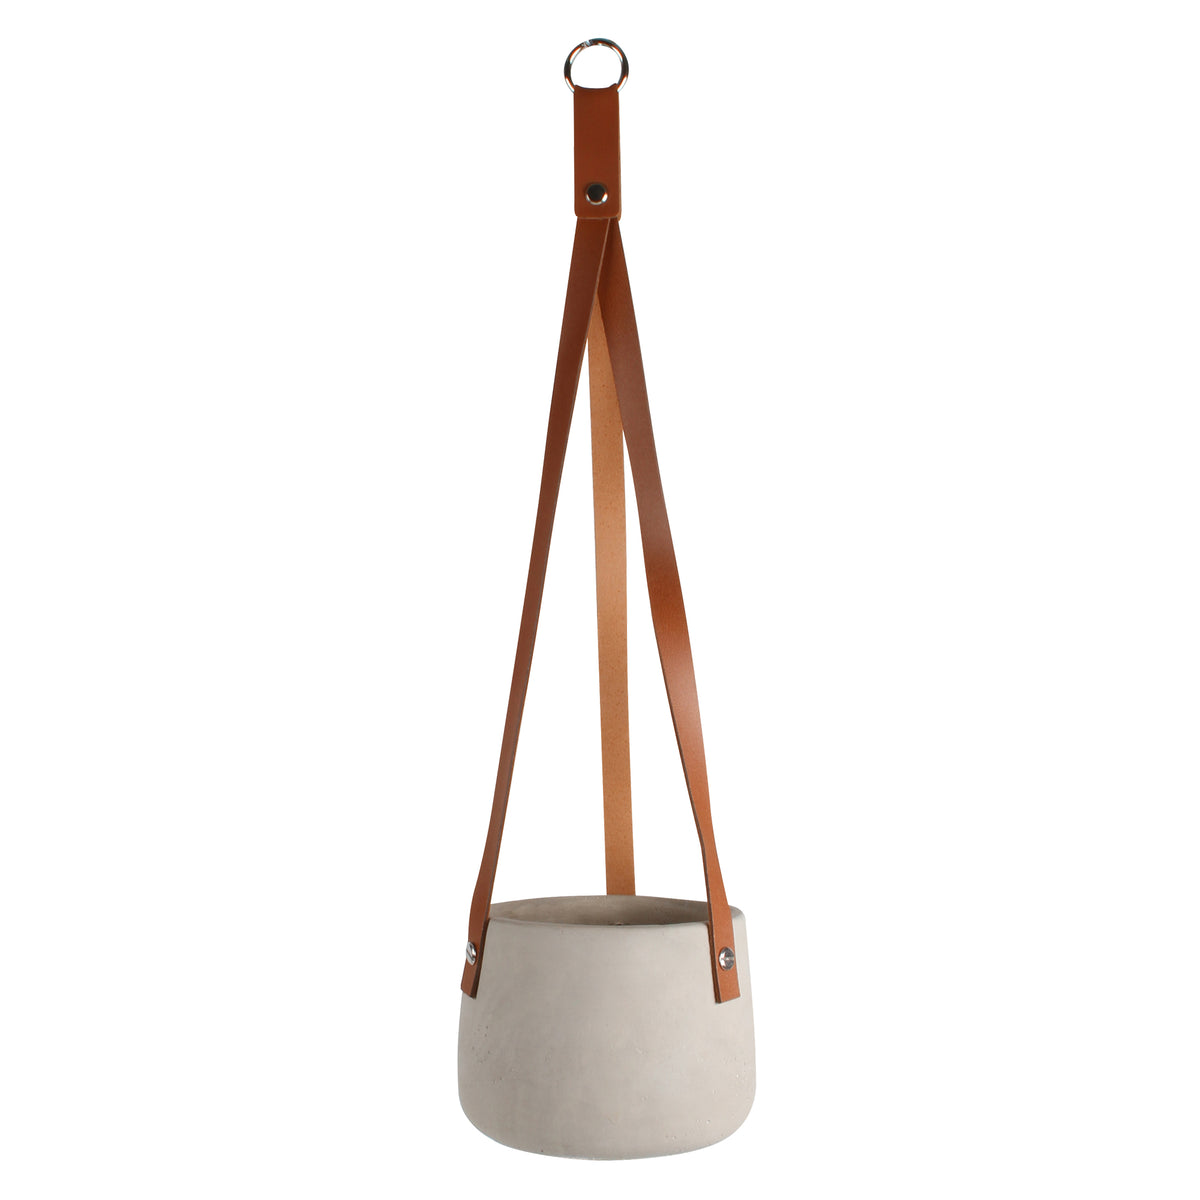 Abiliene Concrete Hanging Pot With Leather Straps 13 x 13 x 10cm